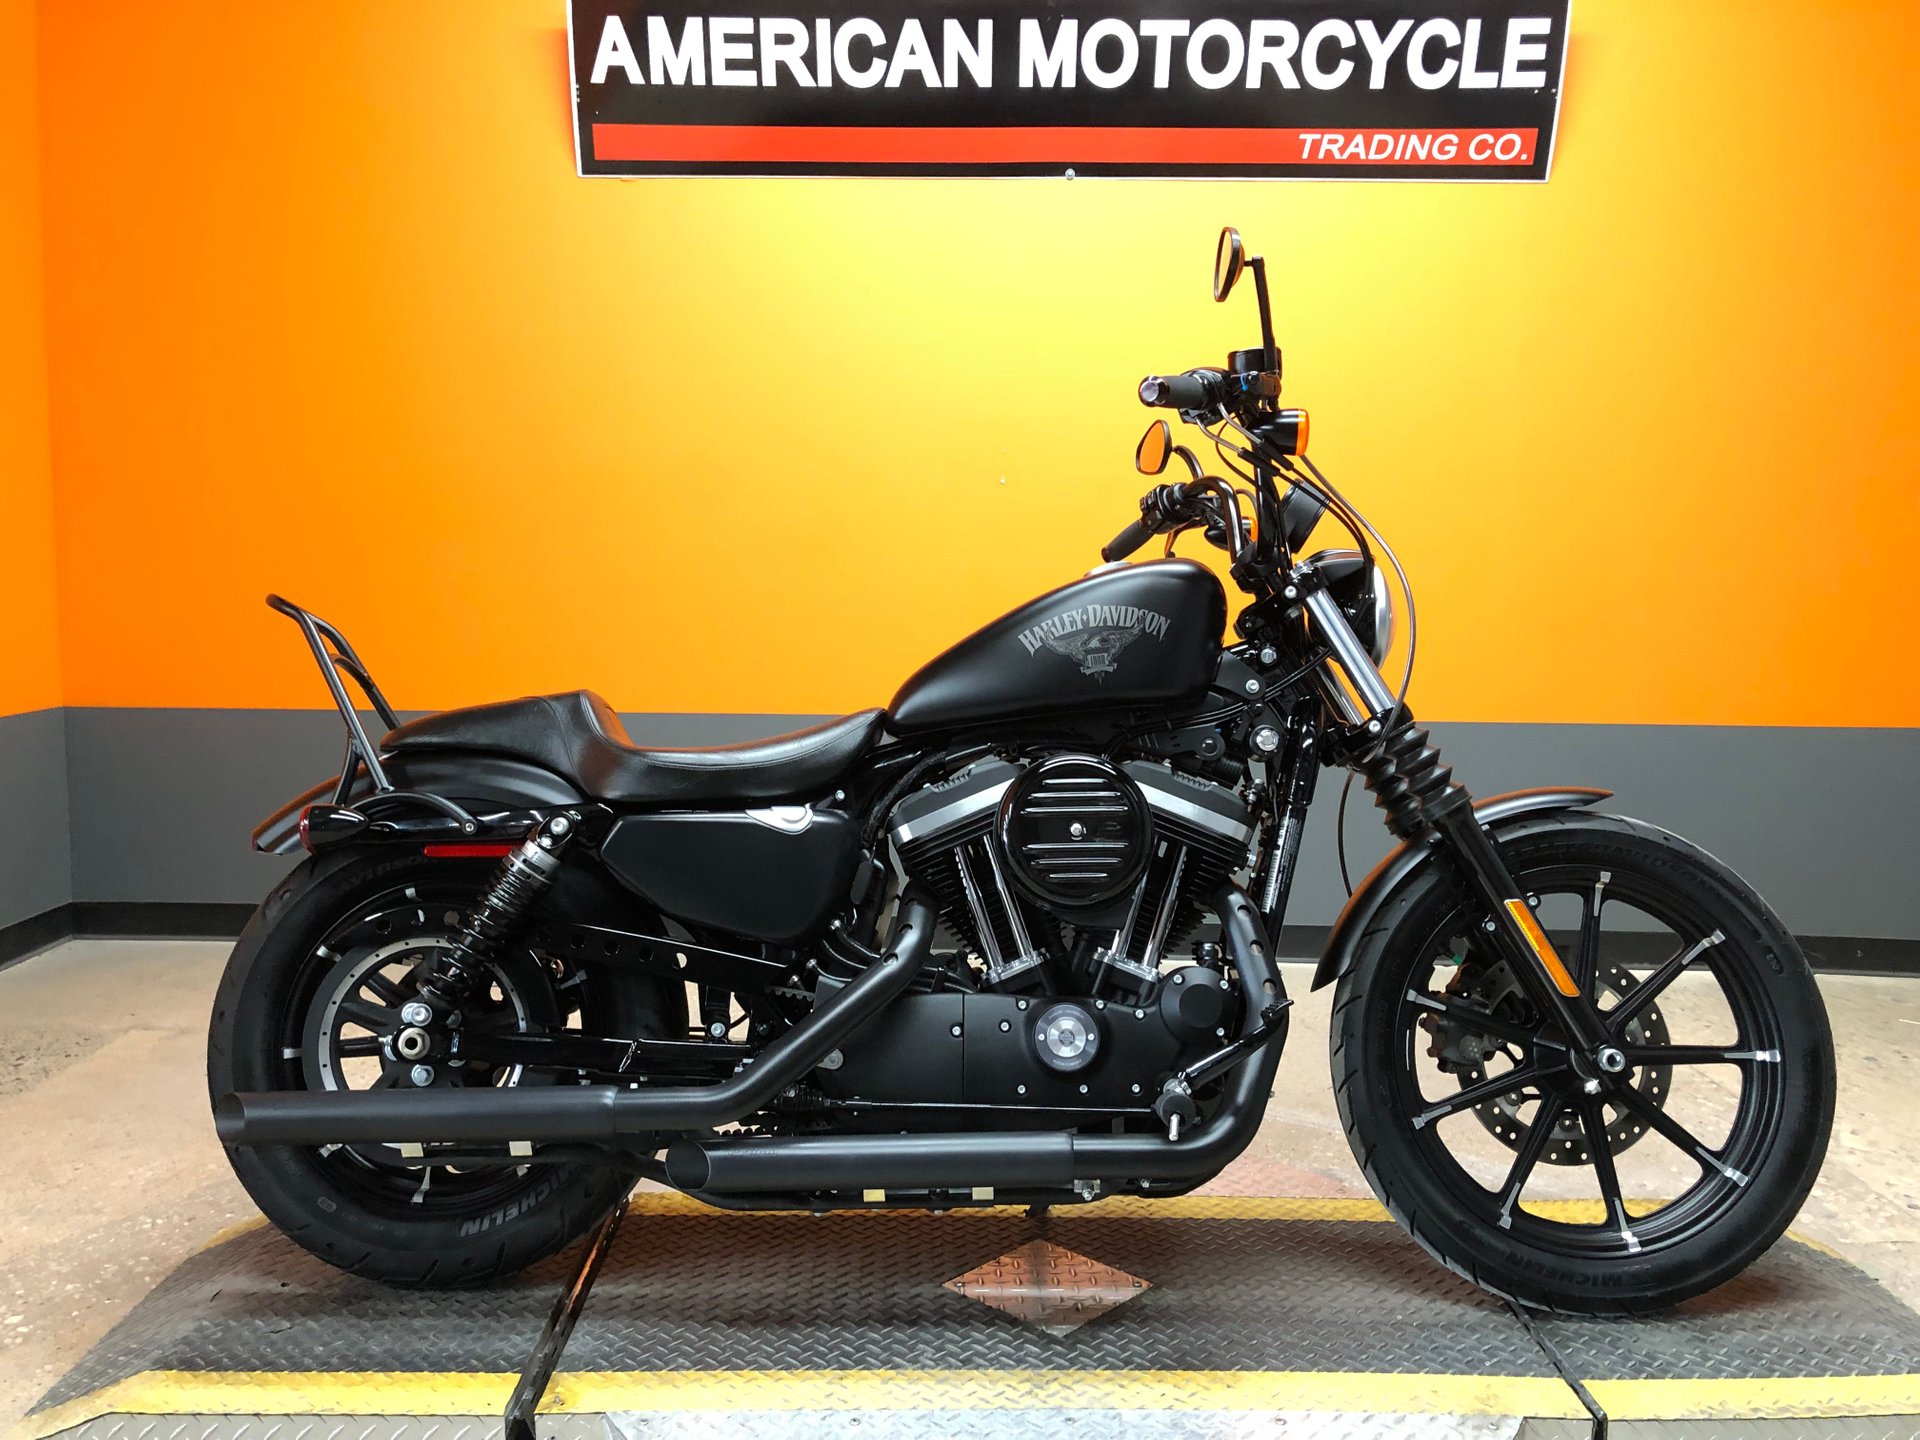 2017 Harley Davidson Sportster 883 American Motorcycle Trading Company Used Harley Davidson Motorcycles